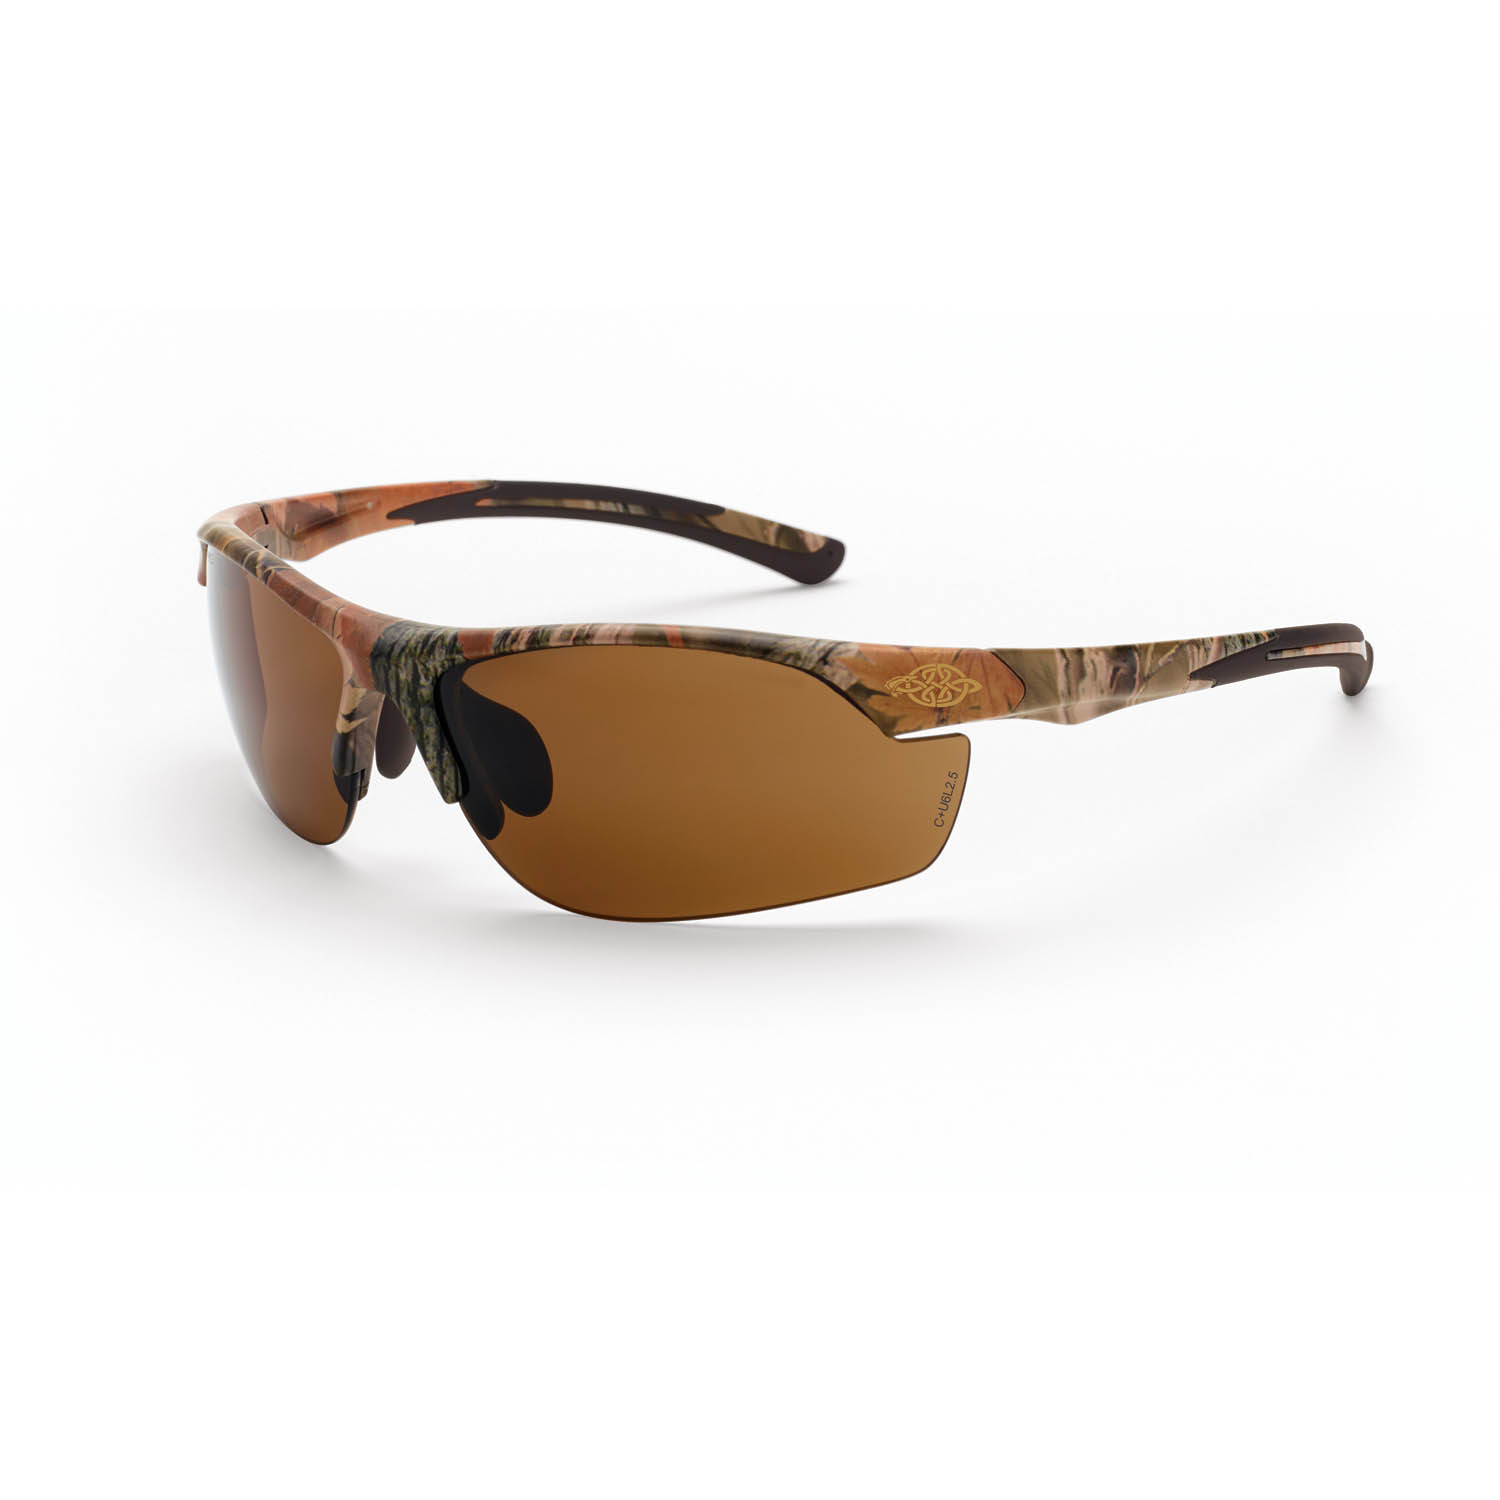 AR3 Premium Safety Eyewear - Woodland Brown Camo Frame - HD Brown Lens